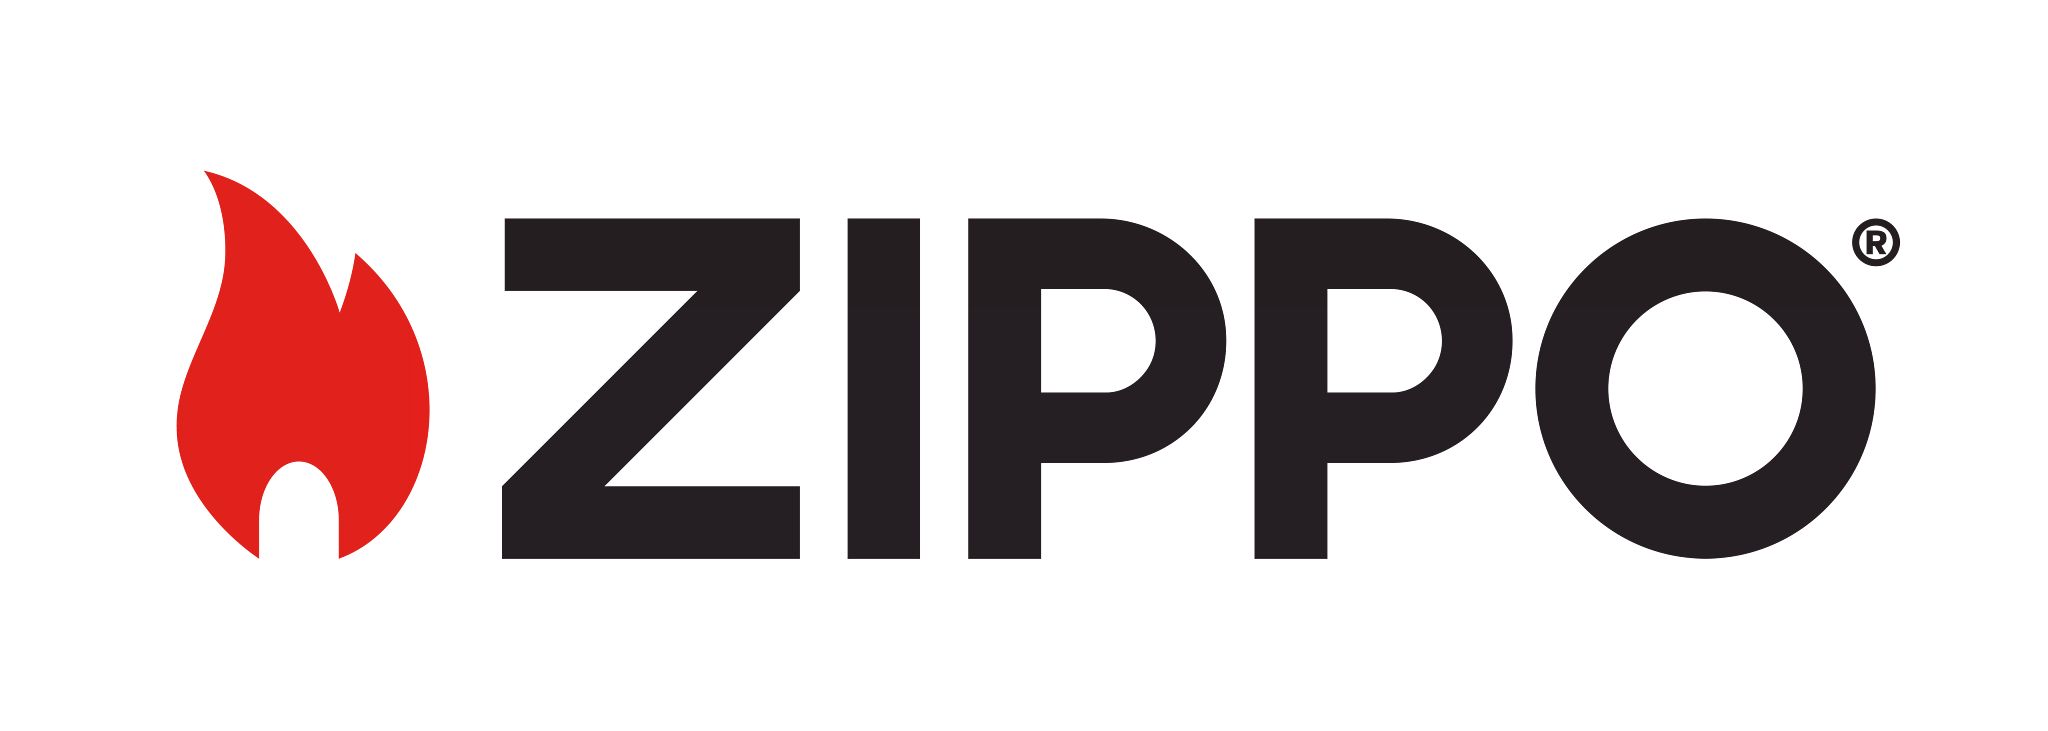 Zippo Trade Development Fund Platform - Sproutloud